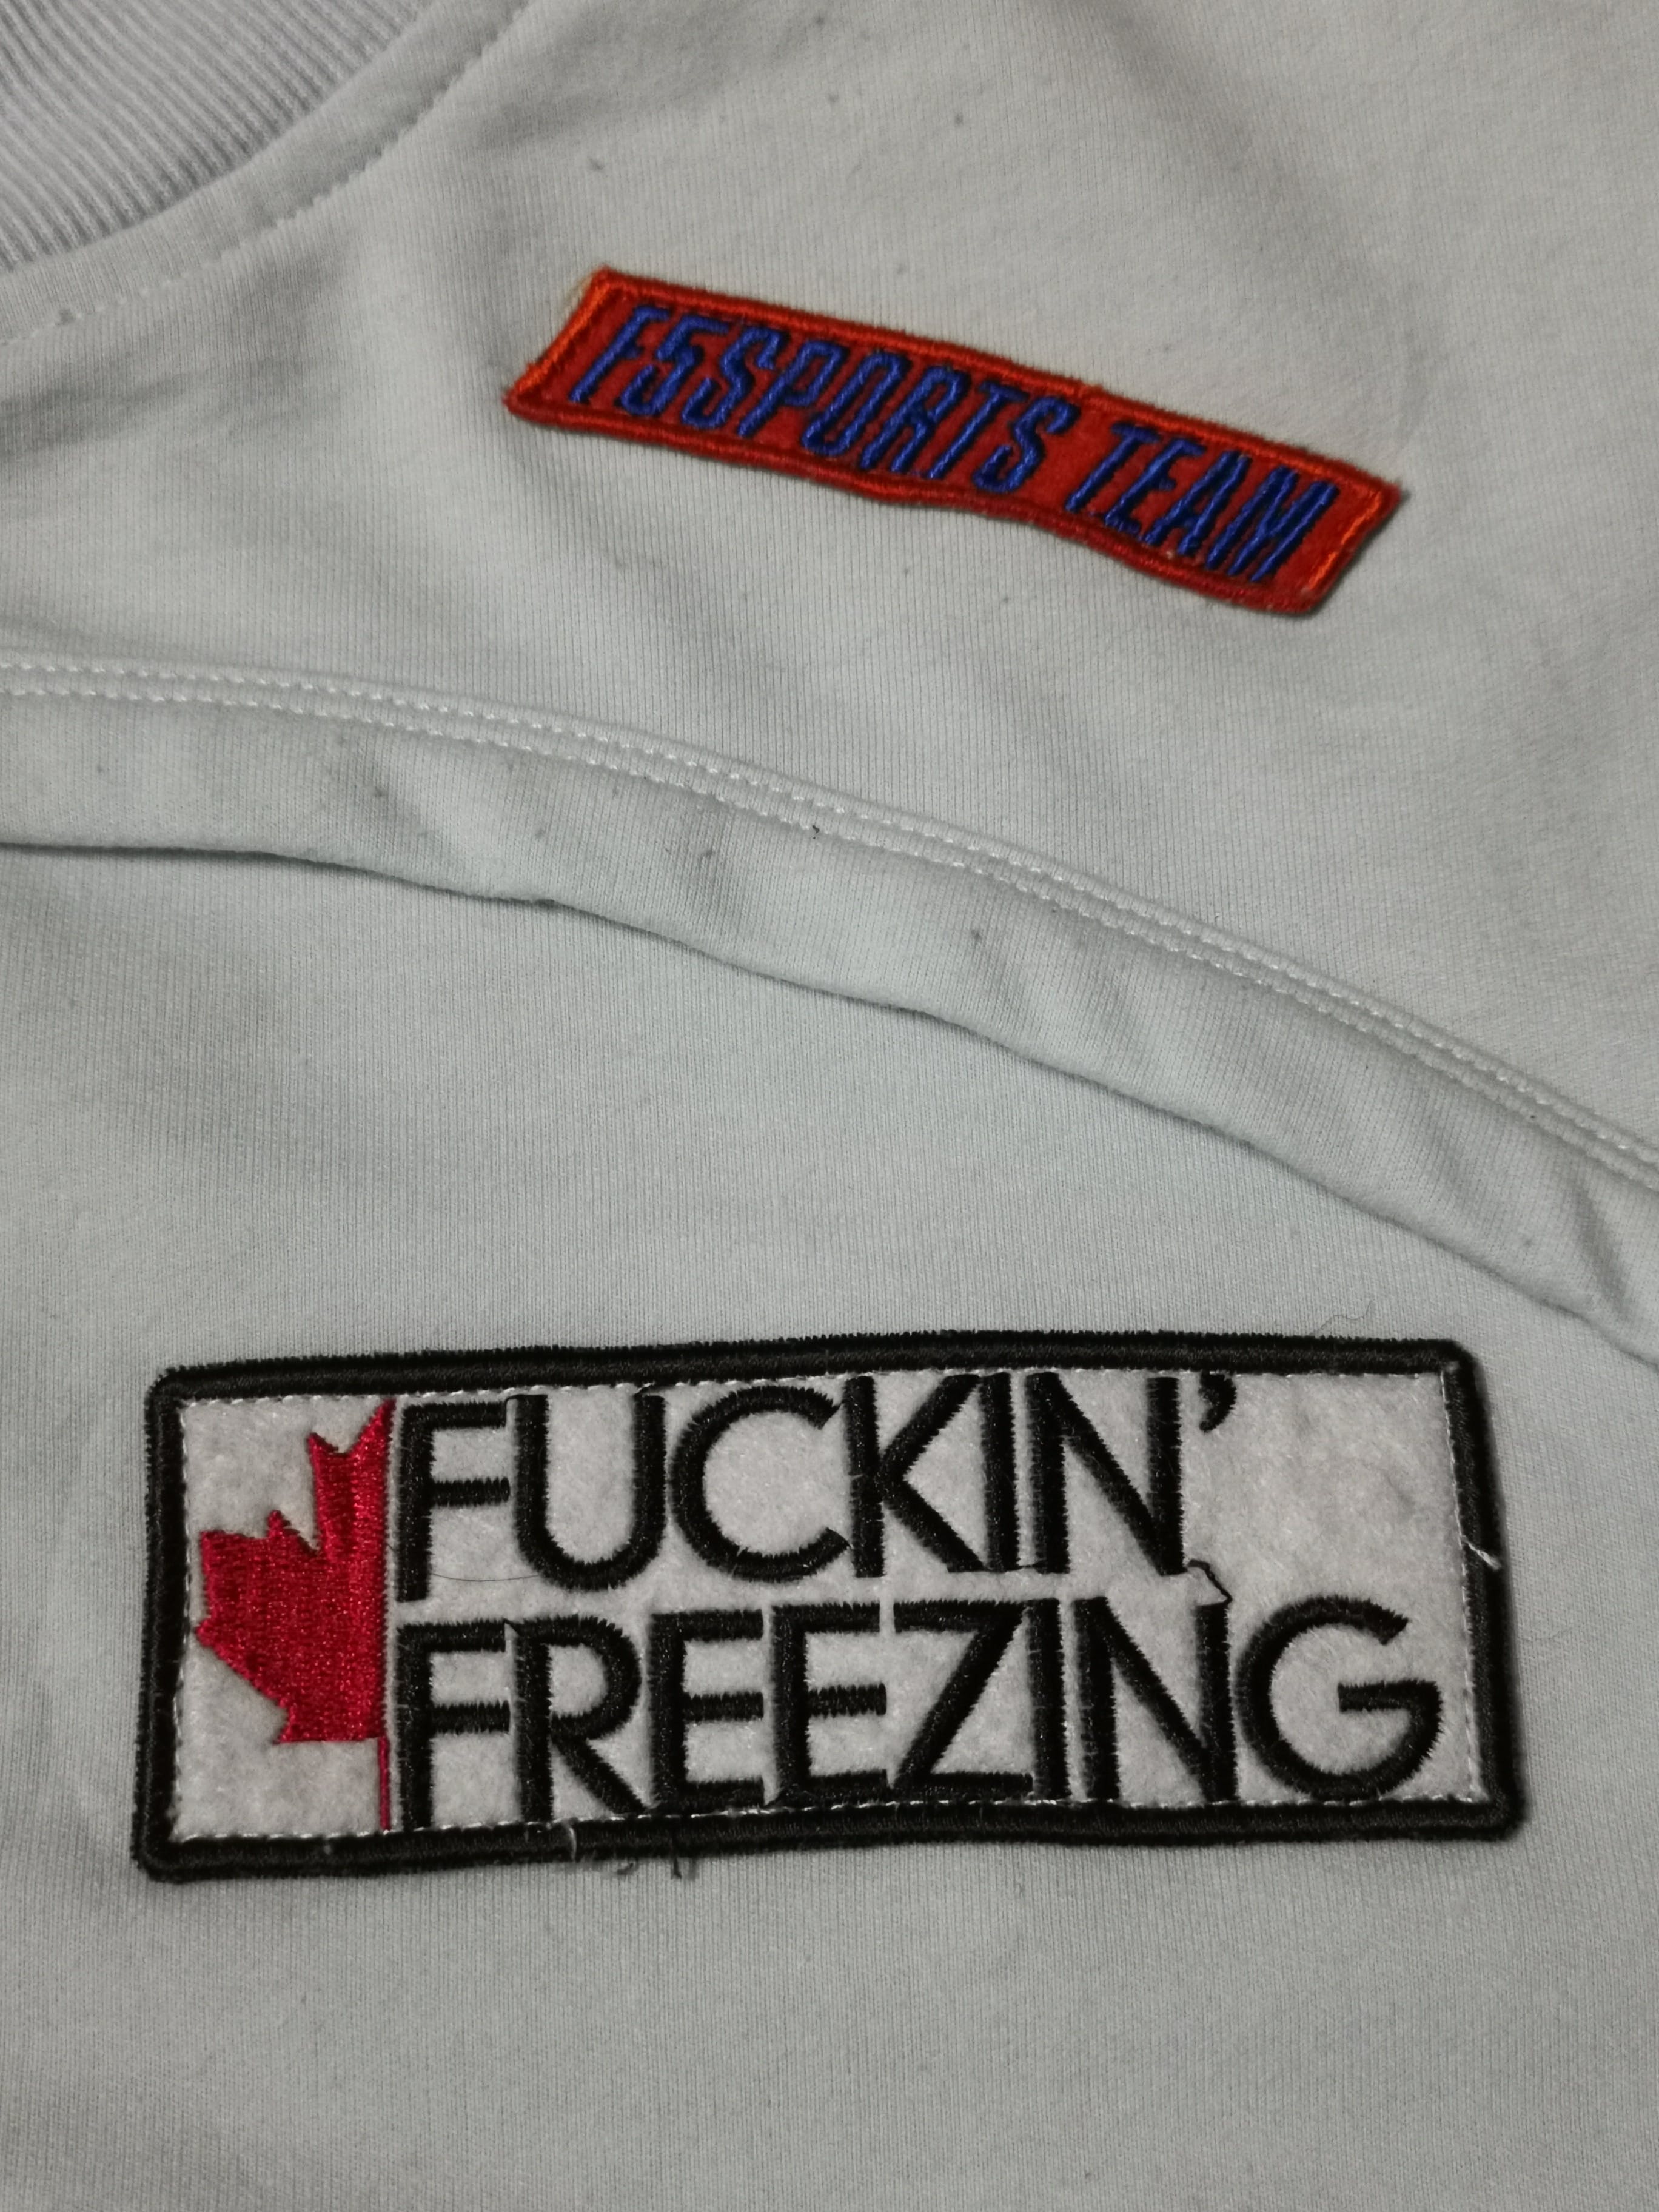 Vintage Sweatshirt DSQUARED2 Fuckin Freezing - Nice Design - 6